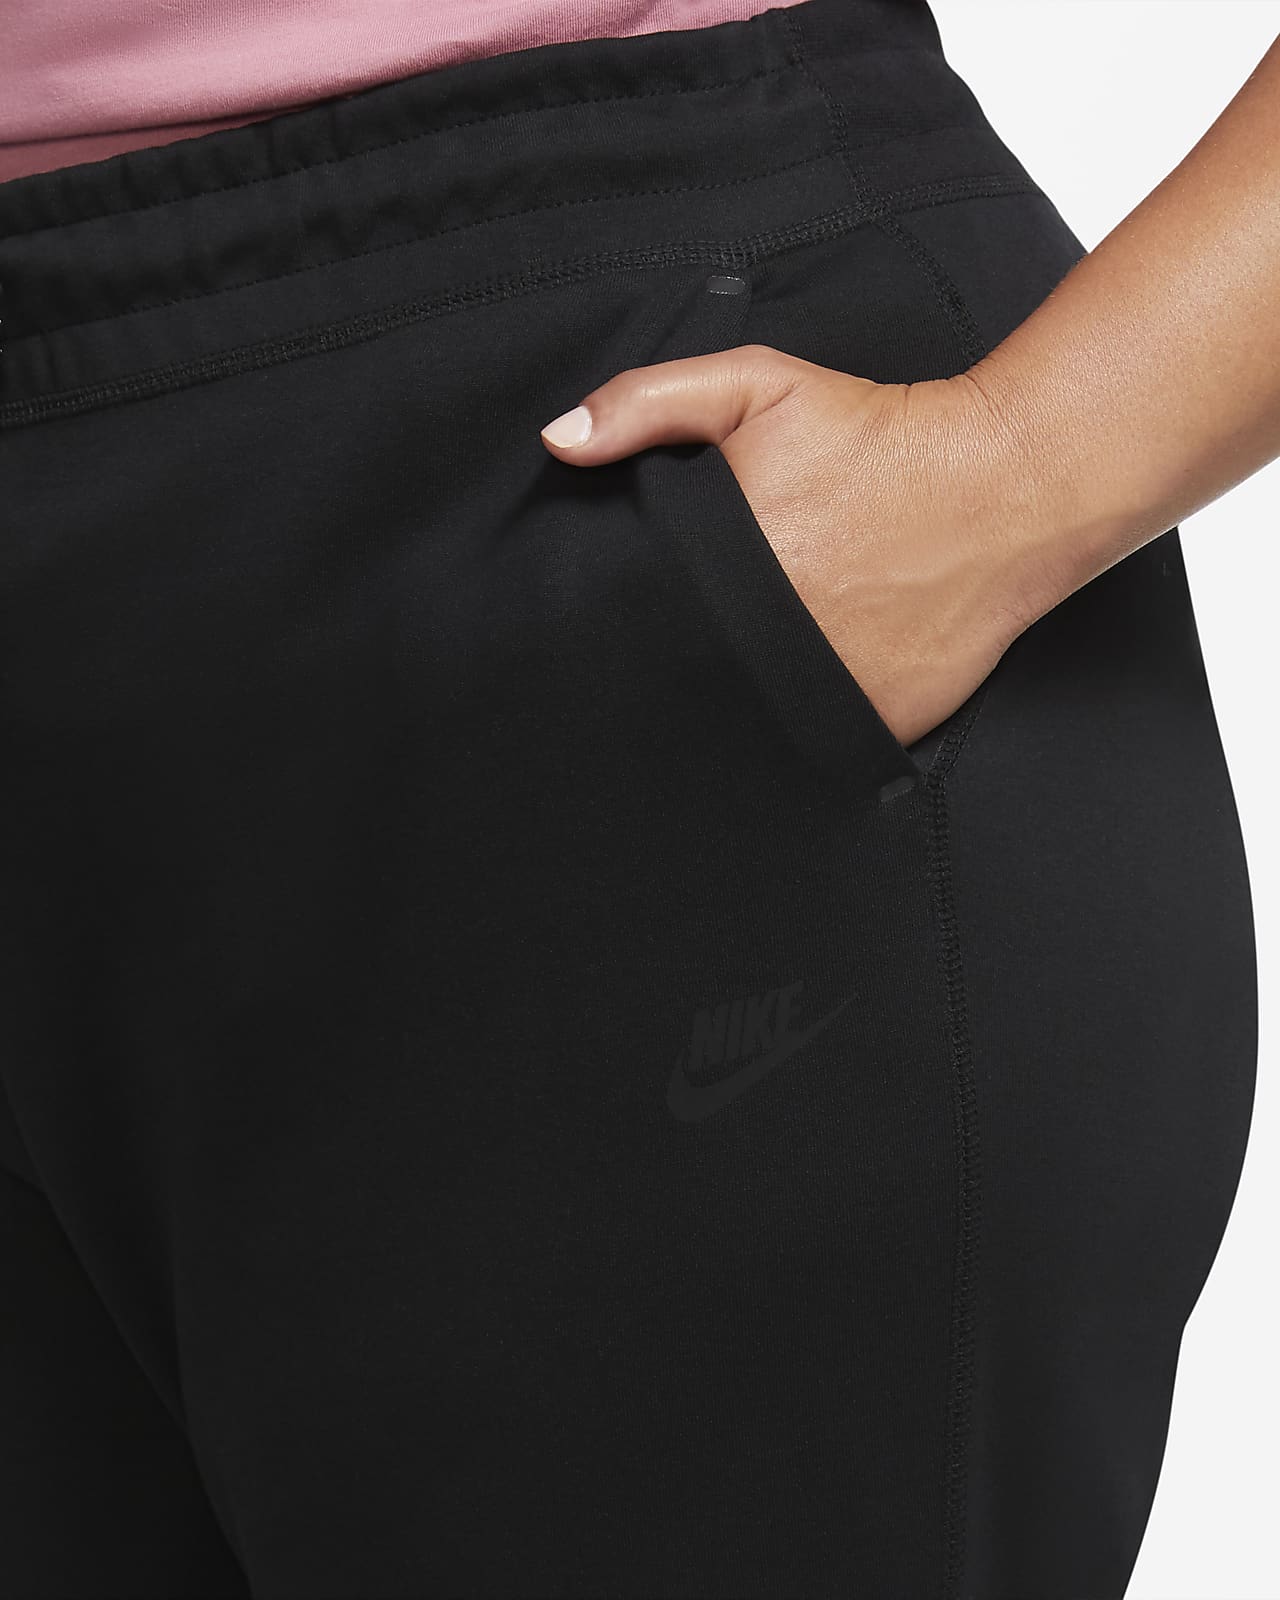 Vaderlijk Besparing soort Nike Sportswear Tech Fleece Damesbroek (grote maten). Nike BE